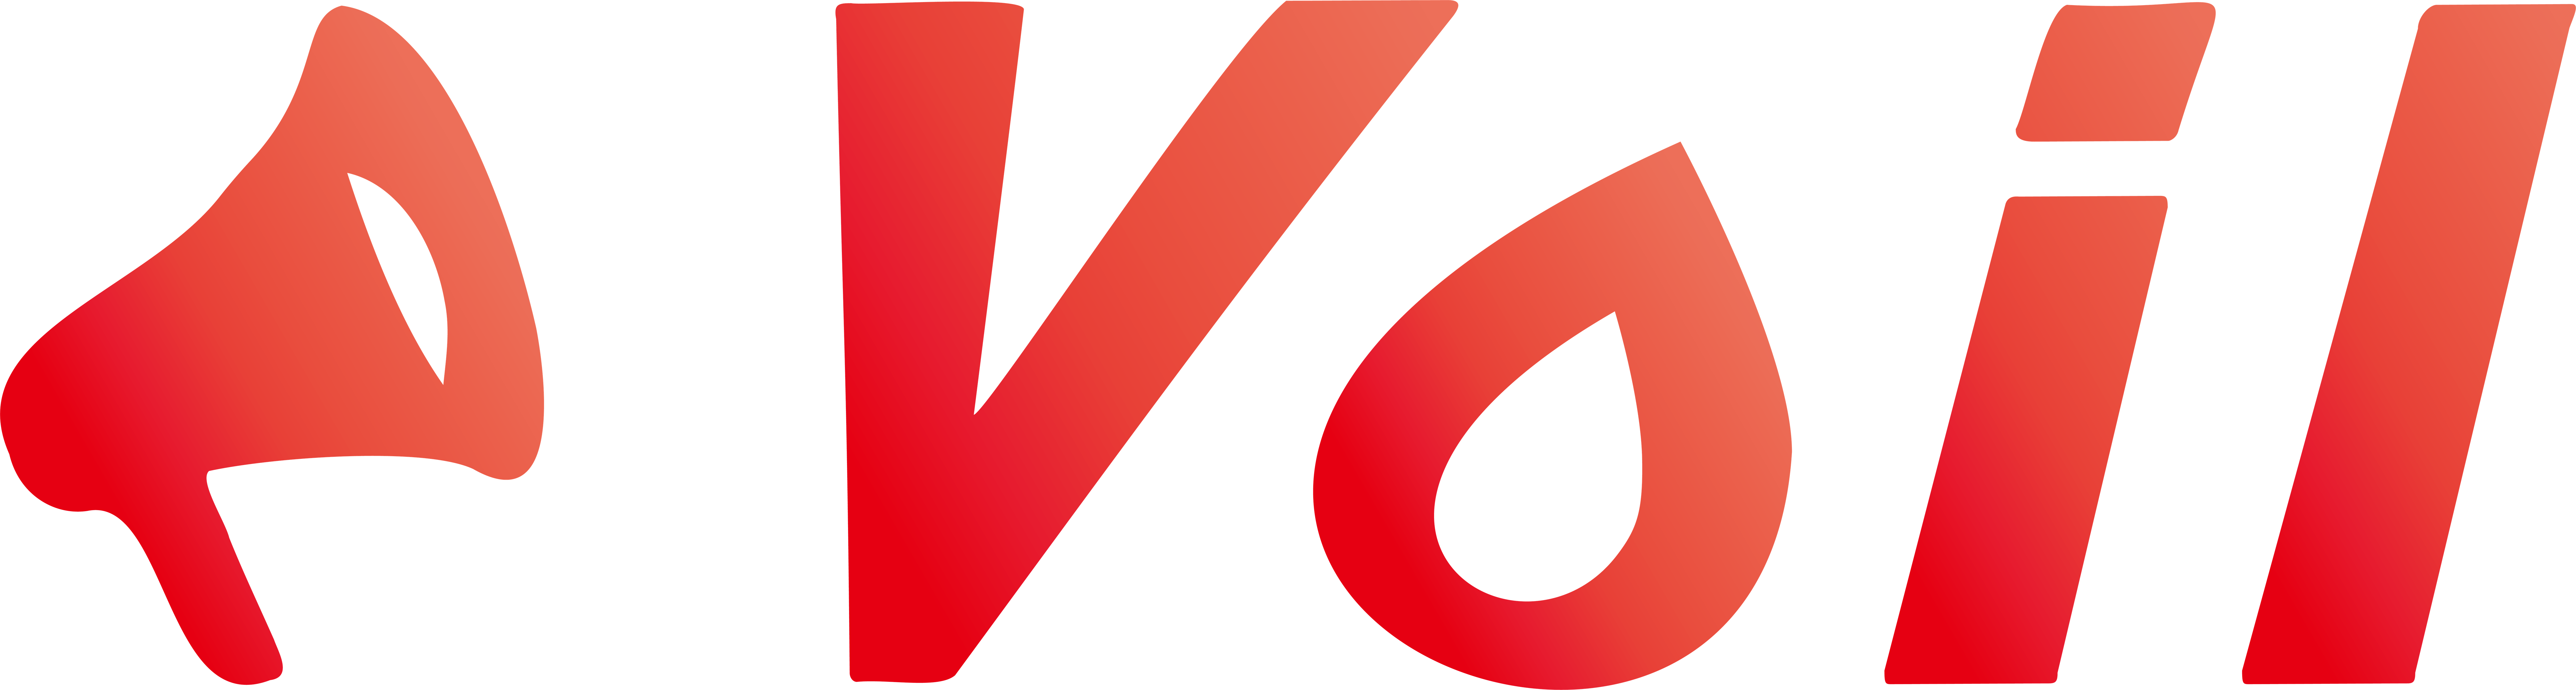 voil_logo